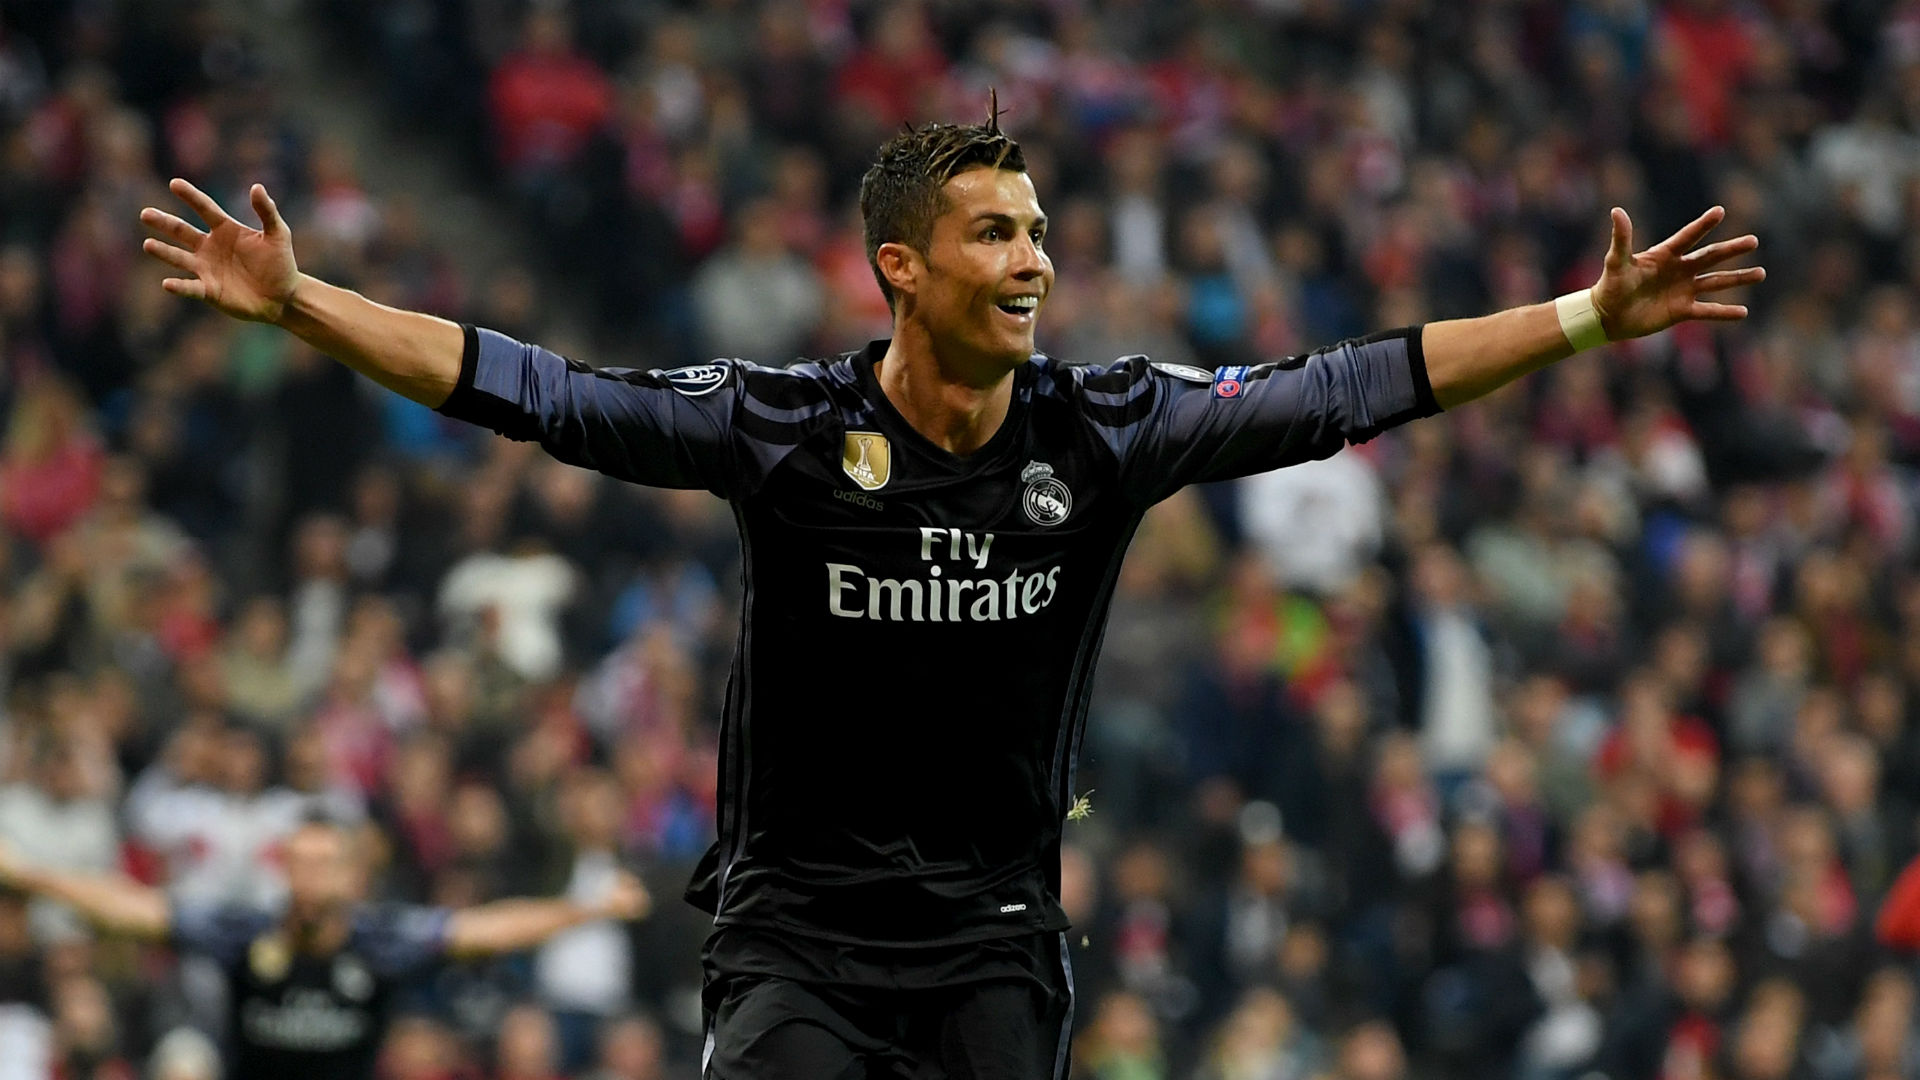 HALA MADRID! — Cristiano Ronaldo celebrating his goal against